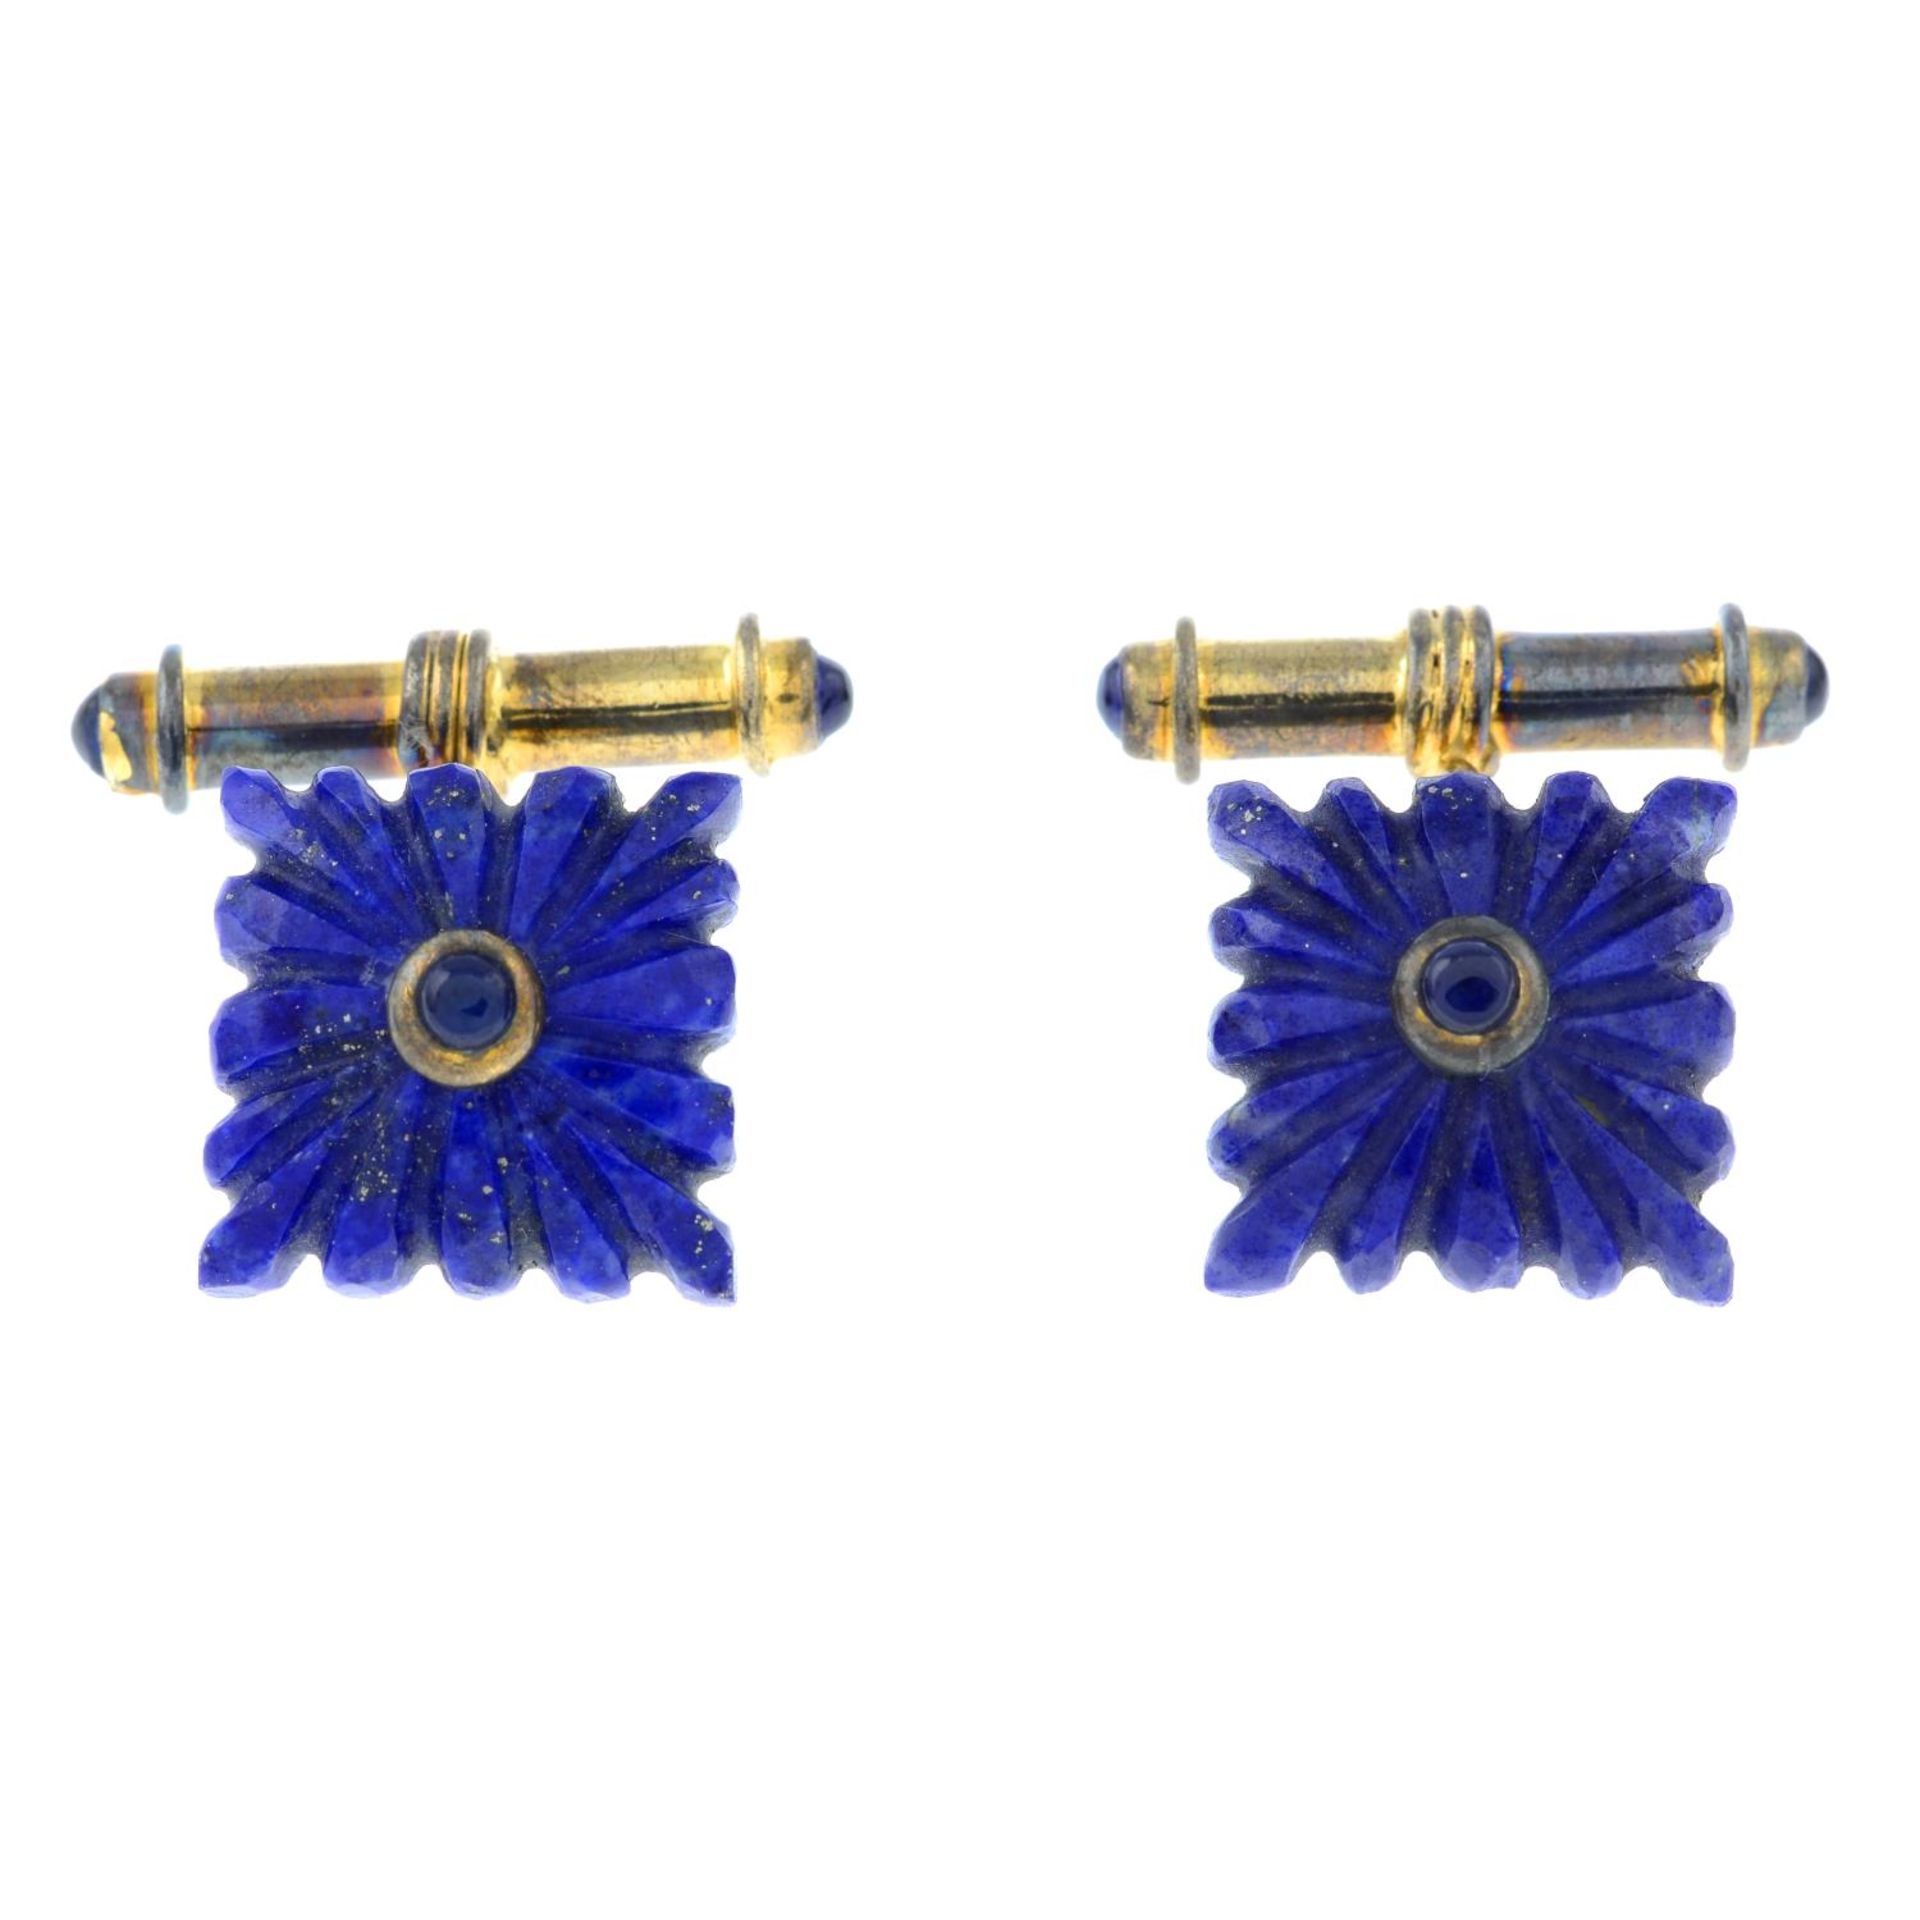 A pair of lapis lazuli cufflinks.Stamped 925.Length of cufflink face 1.4cms 9.1gms.